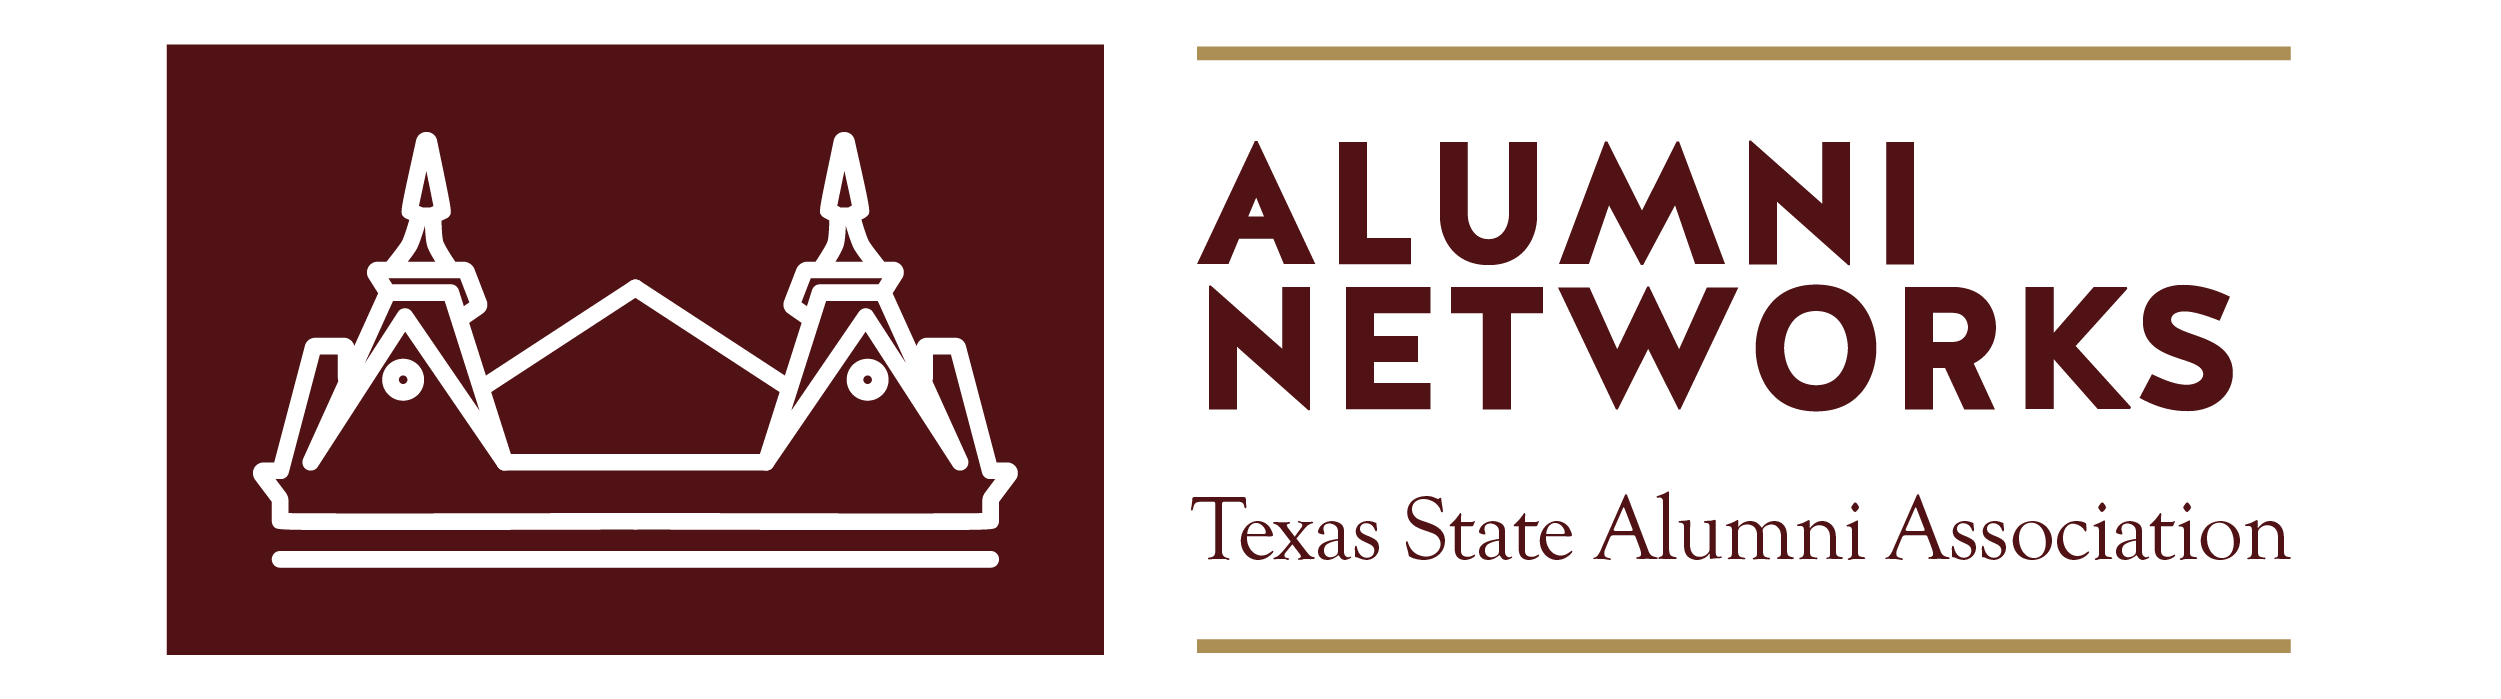 Alumni Networks Maroon Logo